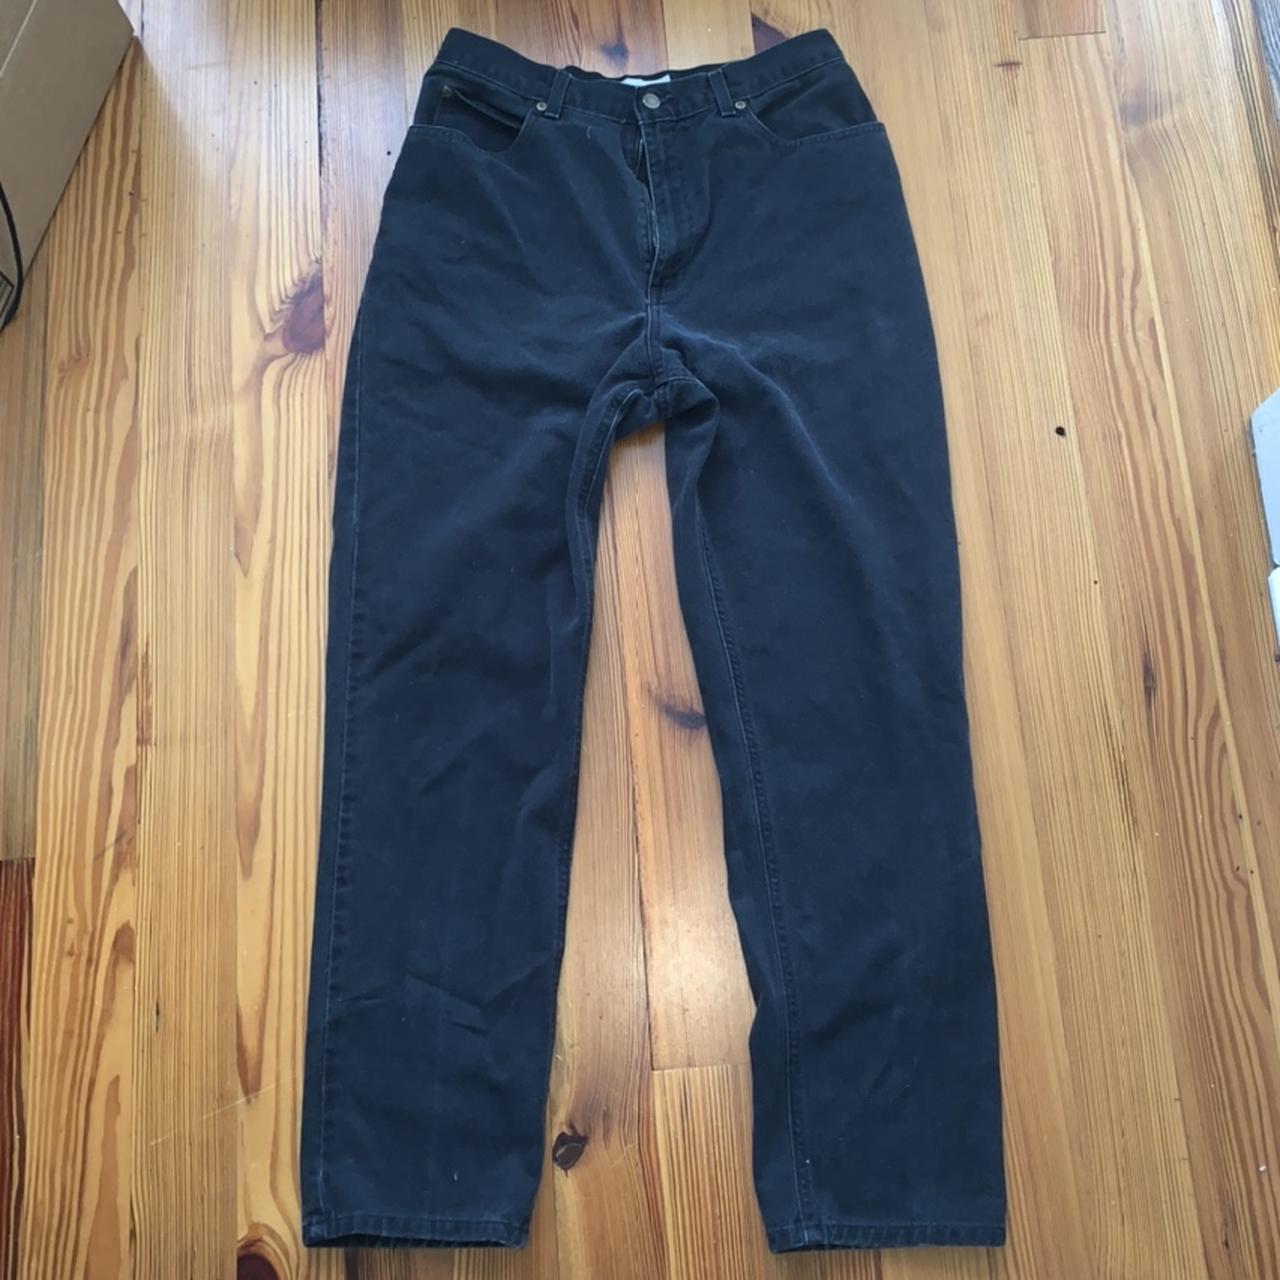 Black vintage dad jeans -Good condition -Size 12... - Depop